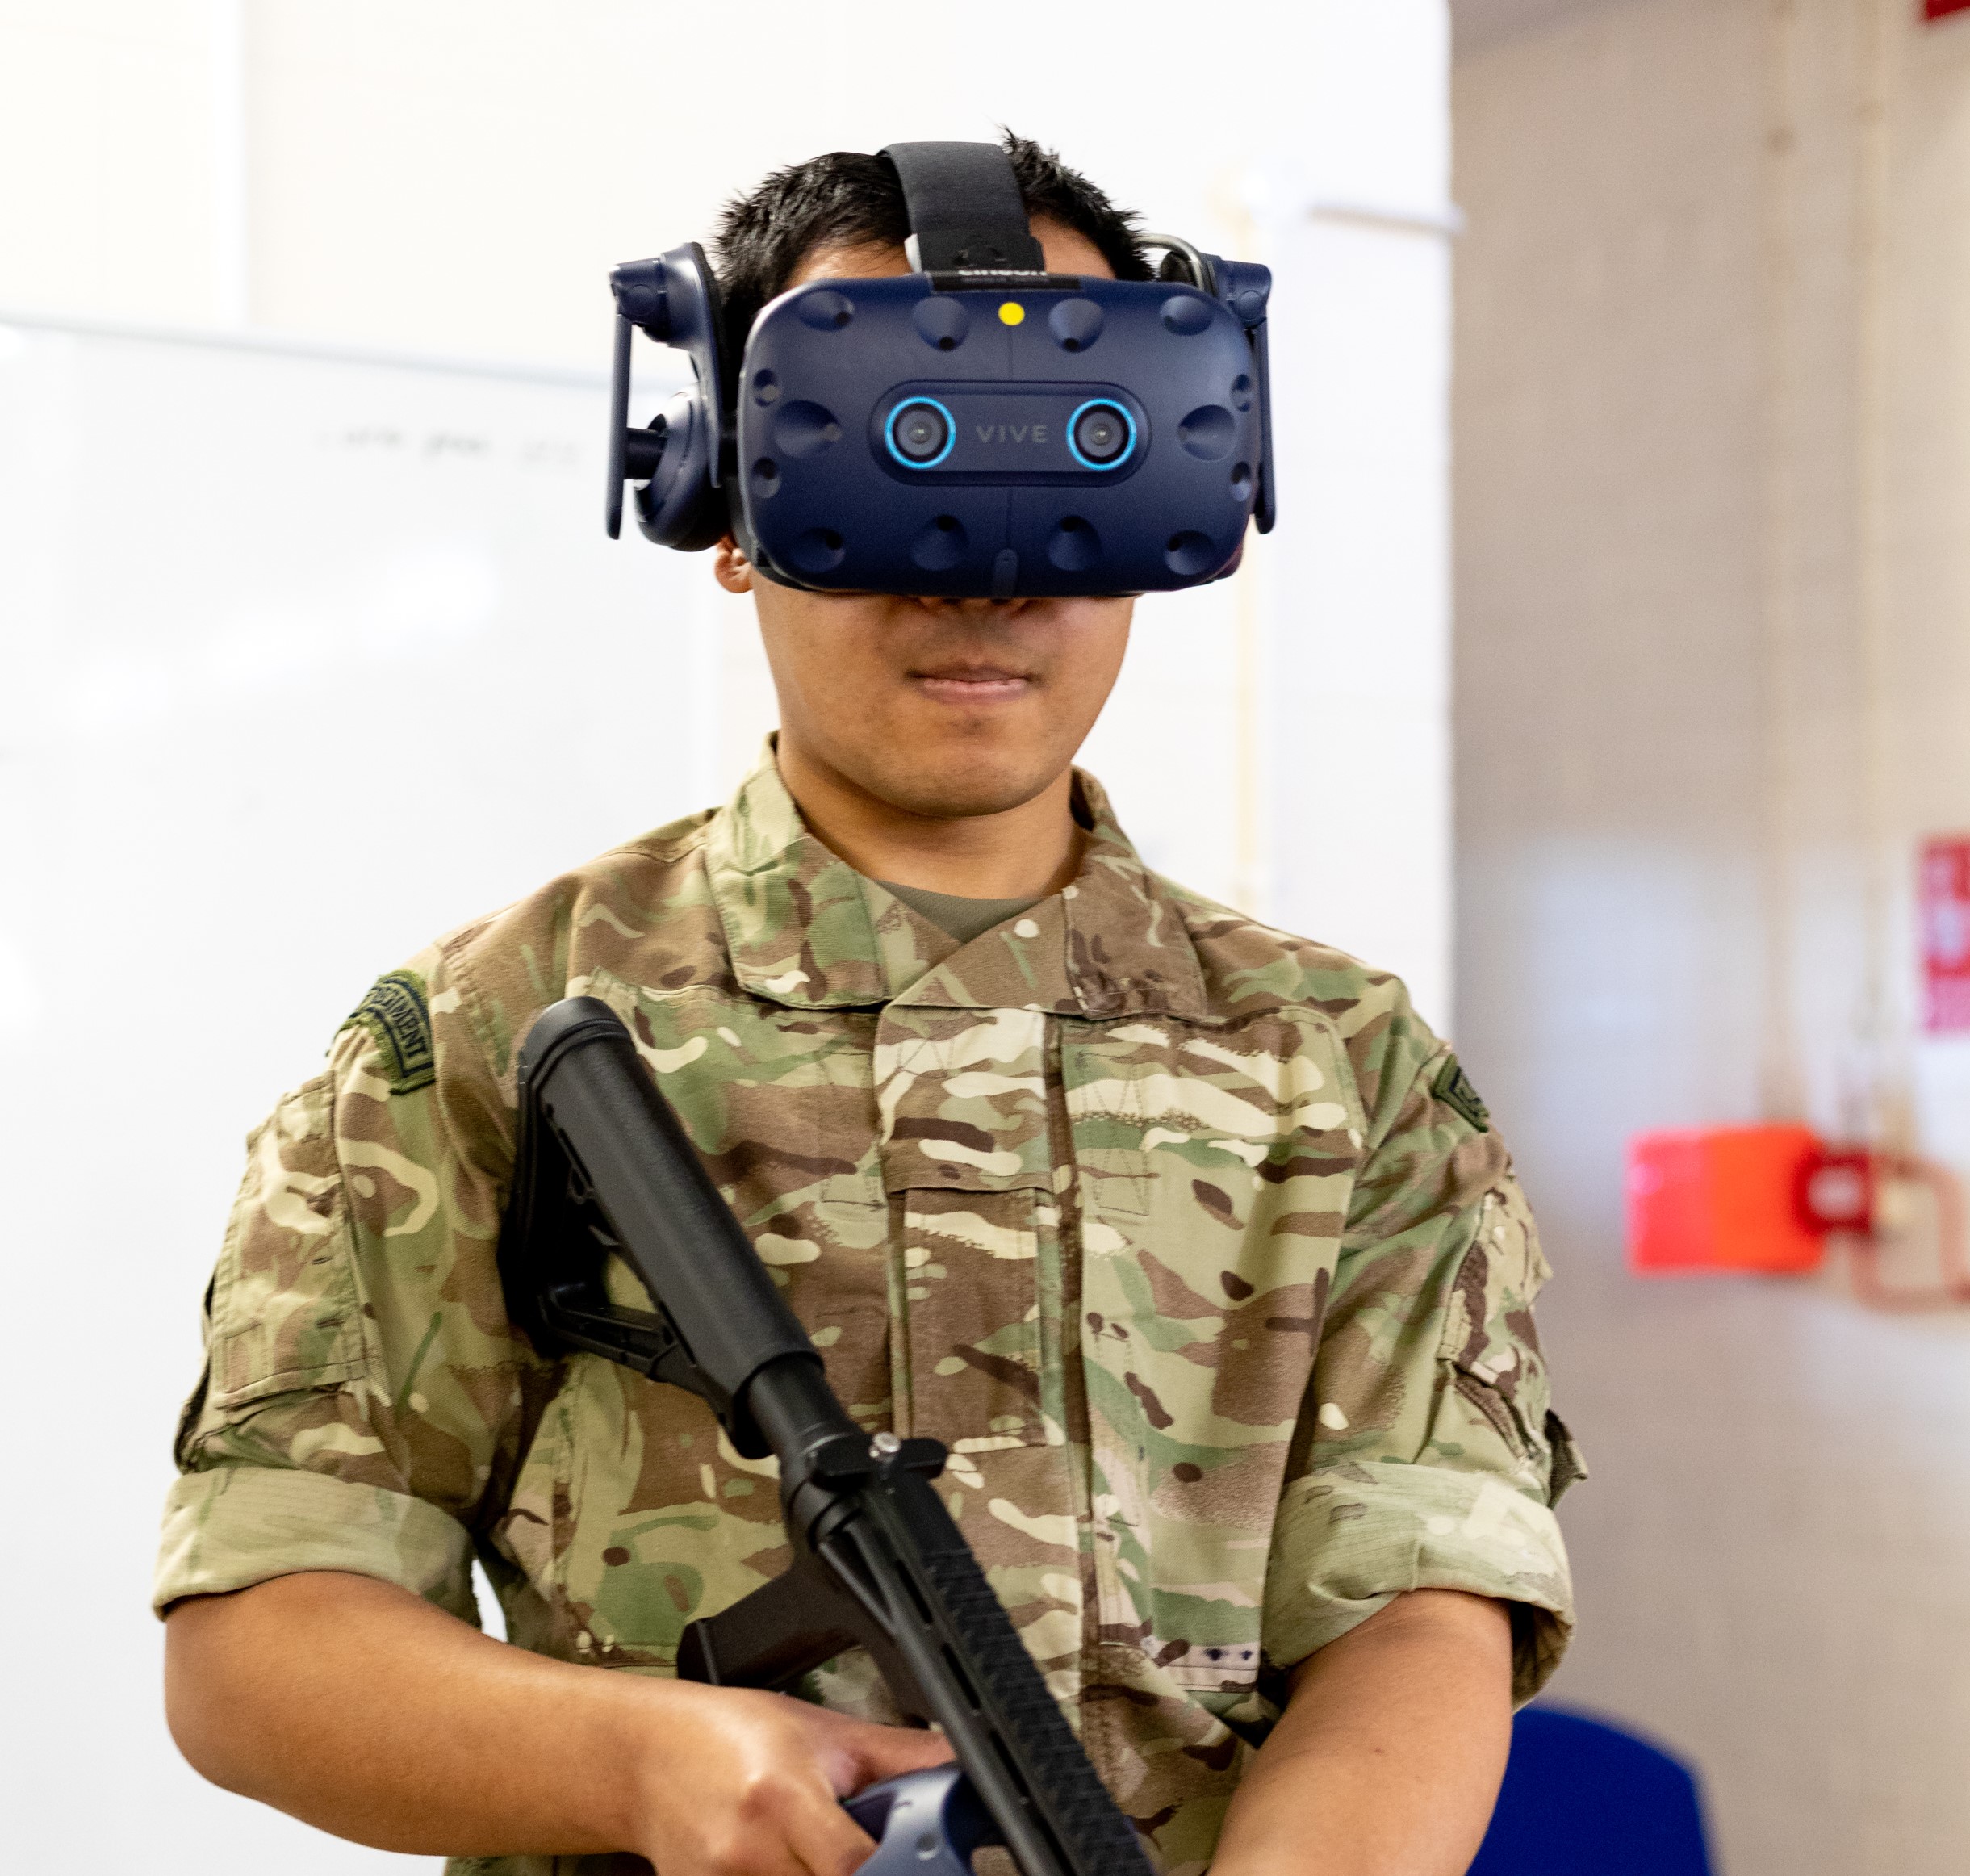 Image shows RAF aviator using virtual reality headset and holding rifle.